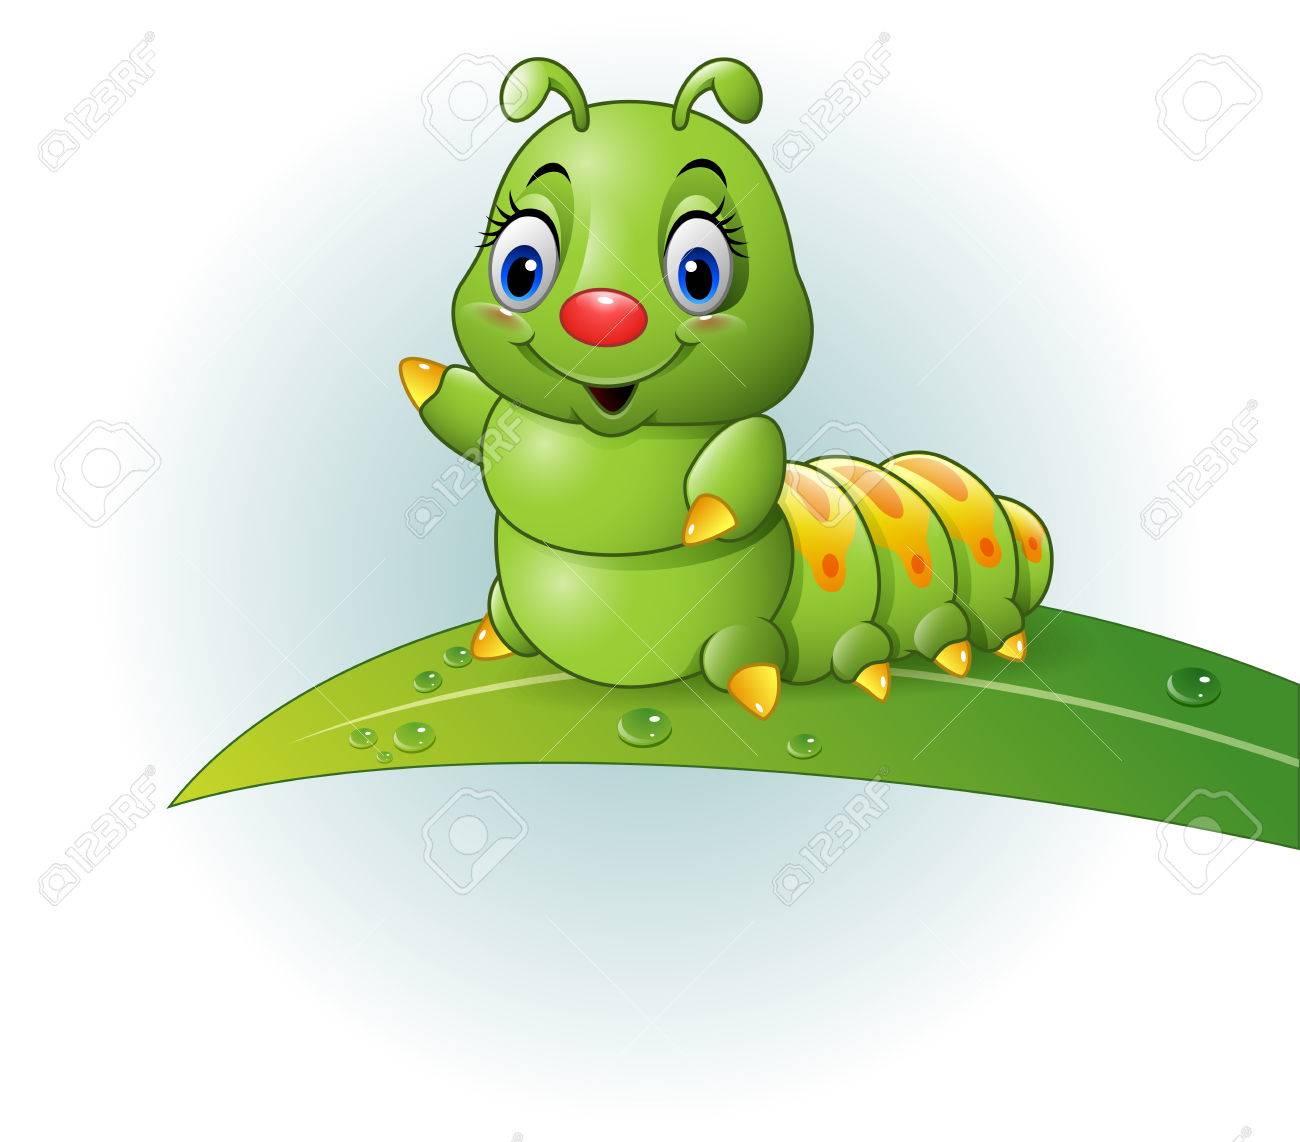 Caterpillar on a leaf clipart